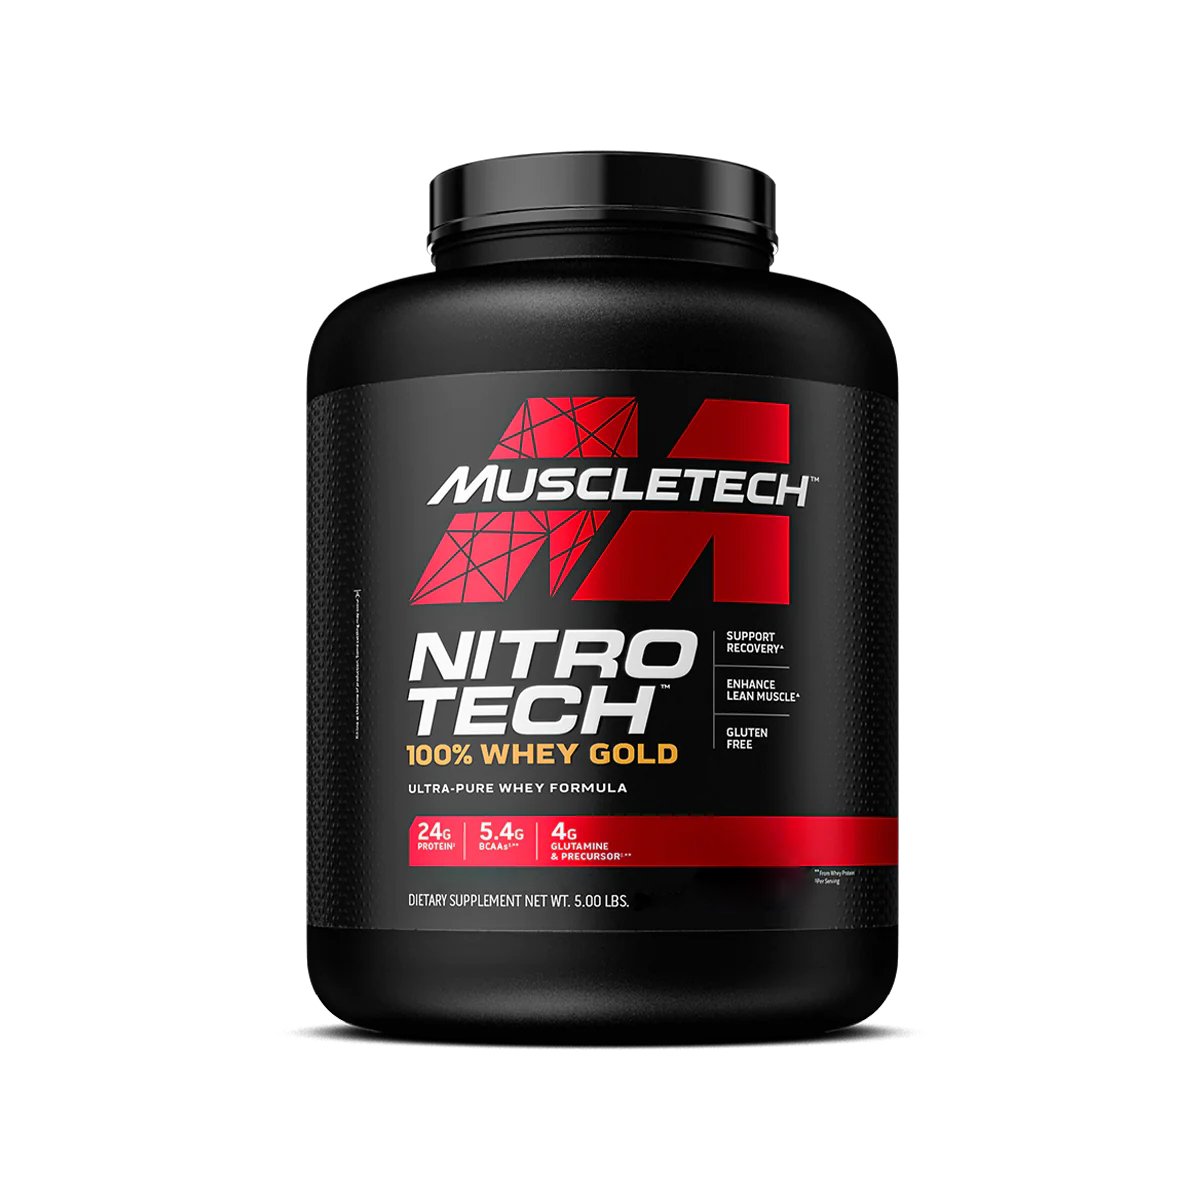 Протеин Muscletech Nitro Tech 100% Whey Gold, 2.27 кг Френч ваниль,  ml, MuscleTech. Proteína. Mass Gain recuperación Anti-catabolic properties 